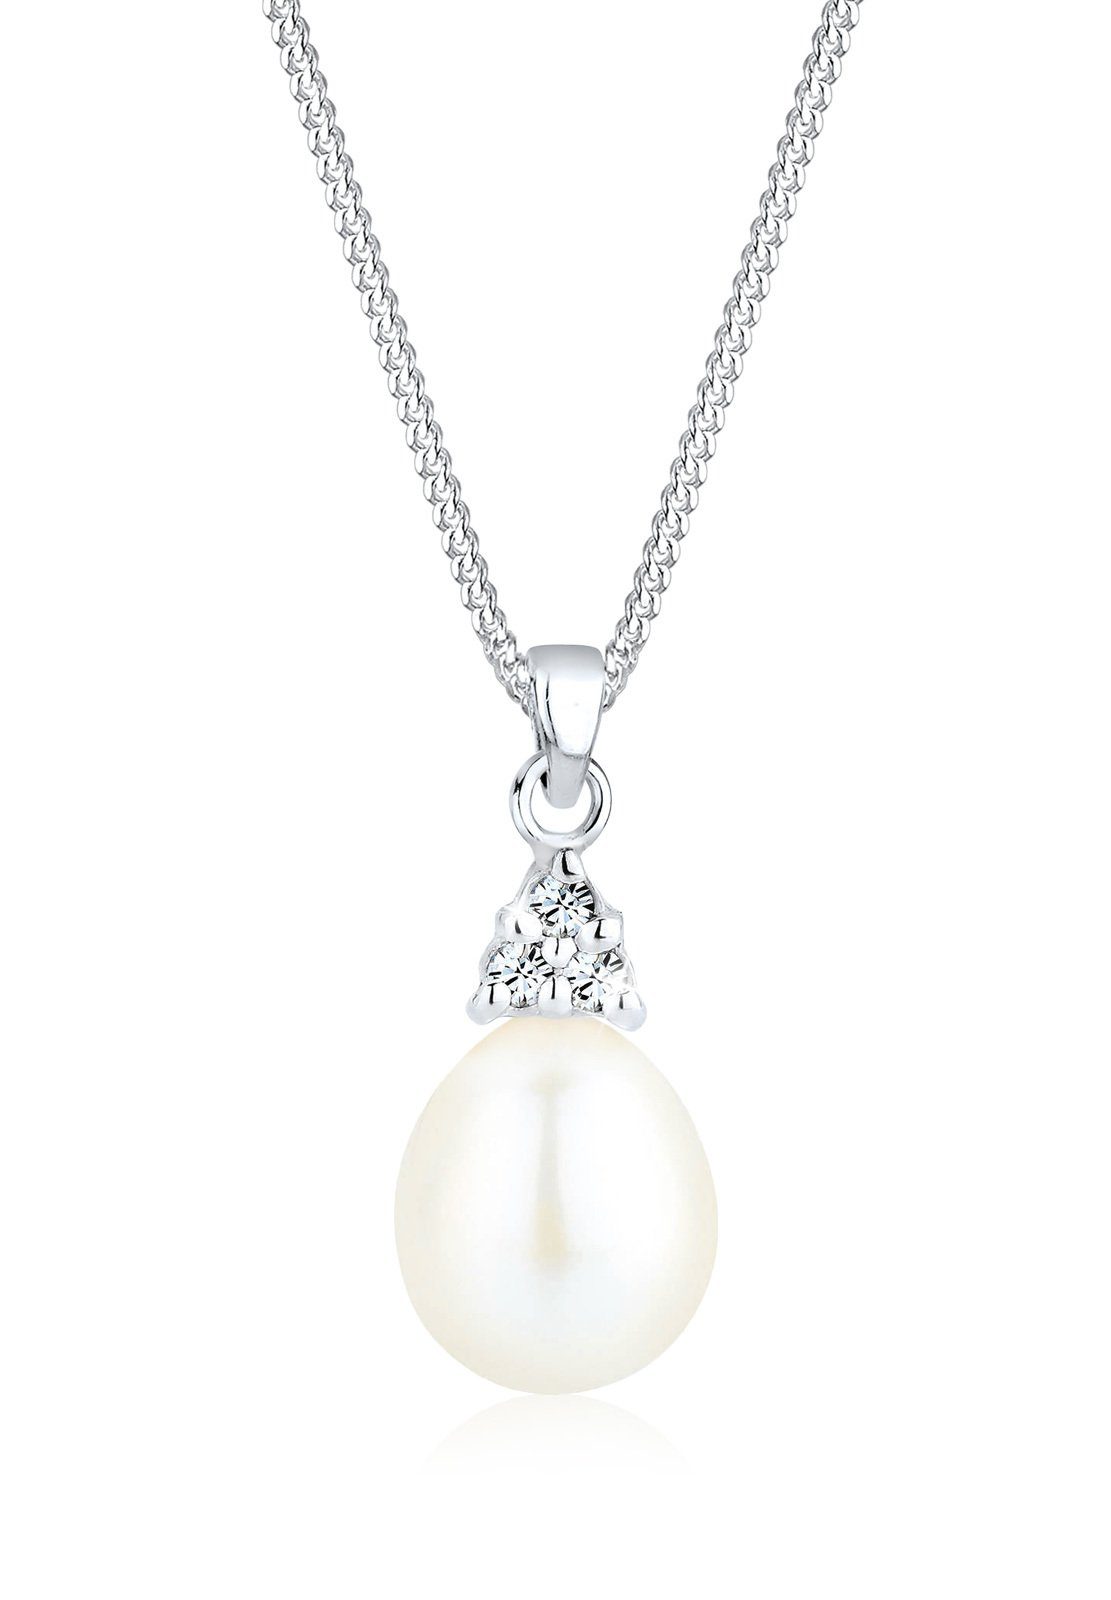 Swarovski Crystal Pendant Necklace – Charming Pearl Necklace With Swarovski  Stones For Dirndl Dresses, Wedding Dress Or Evening Dress | surbhifoods.com